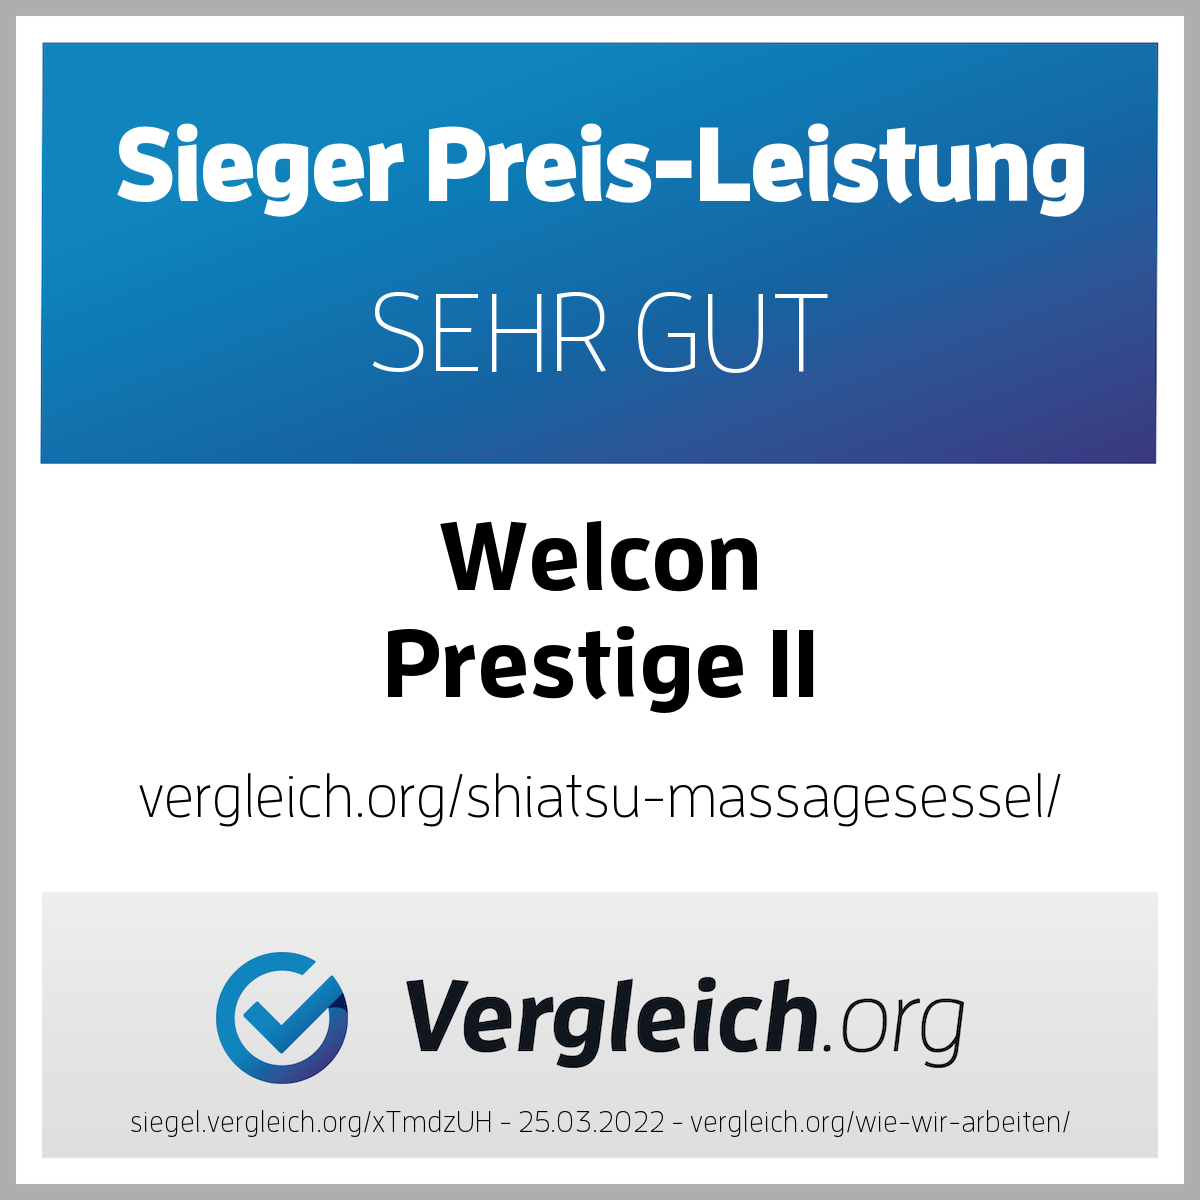 Massagesessel WELCON Prestige II in rot / weinrot